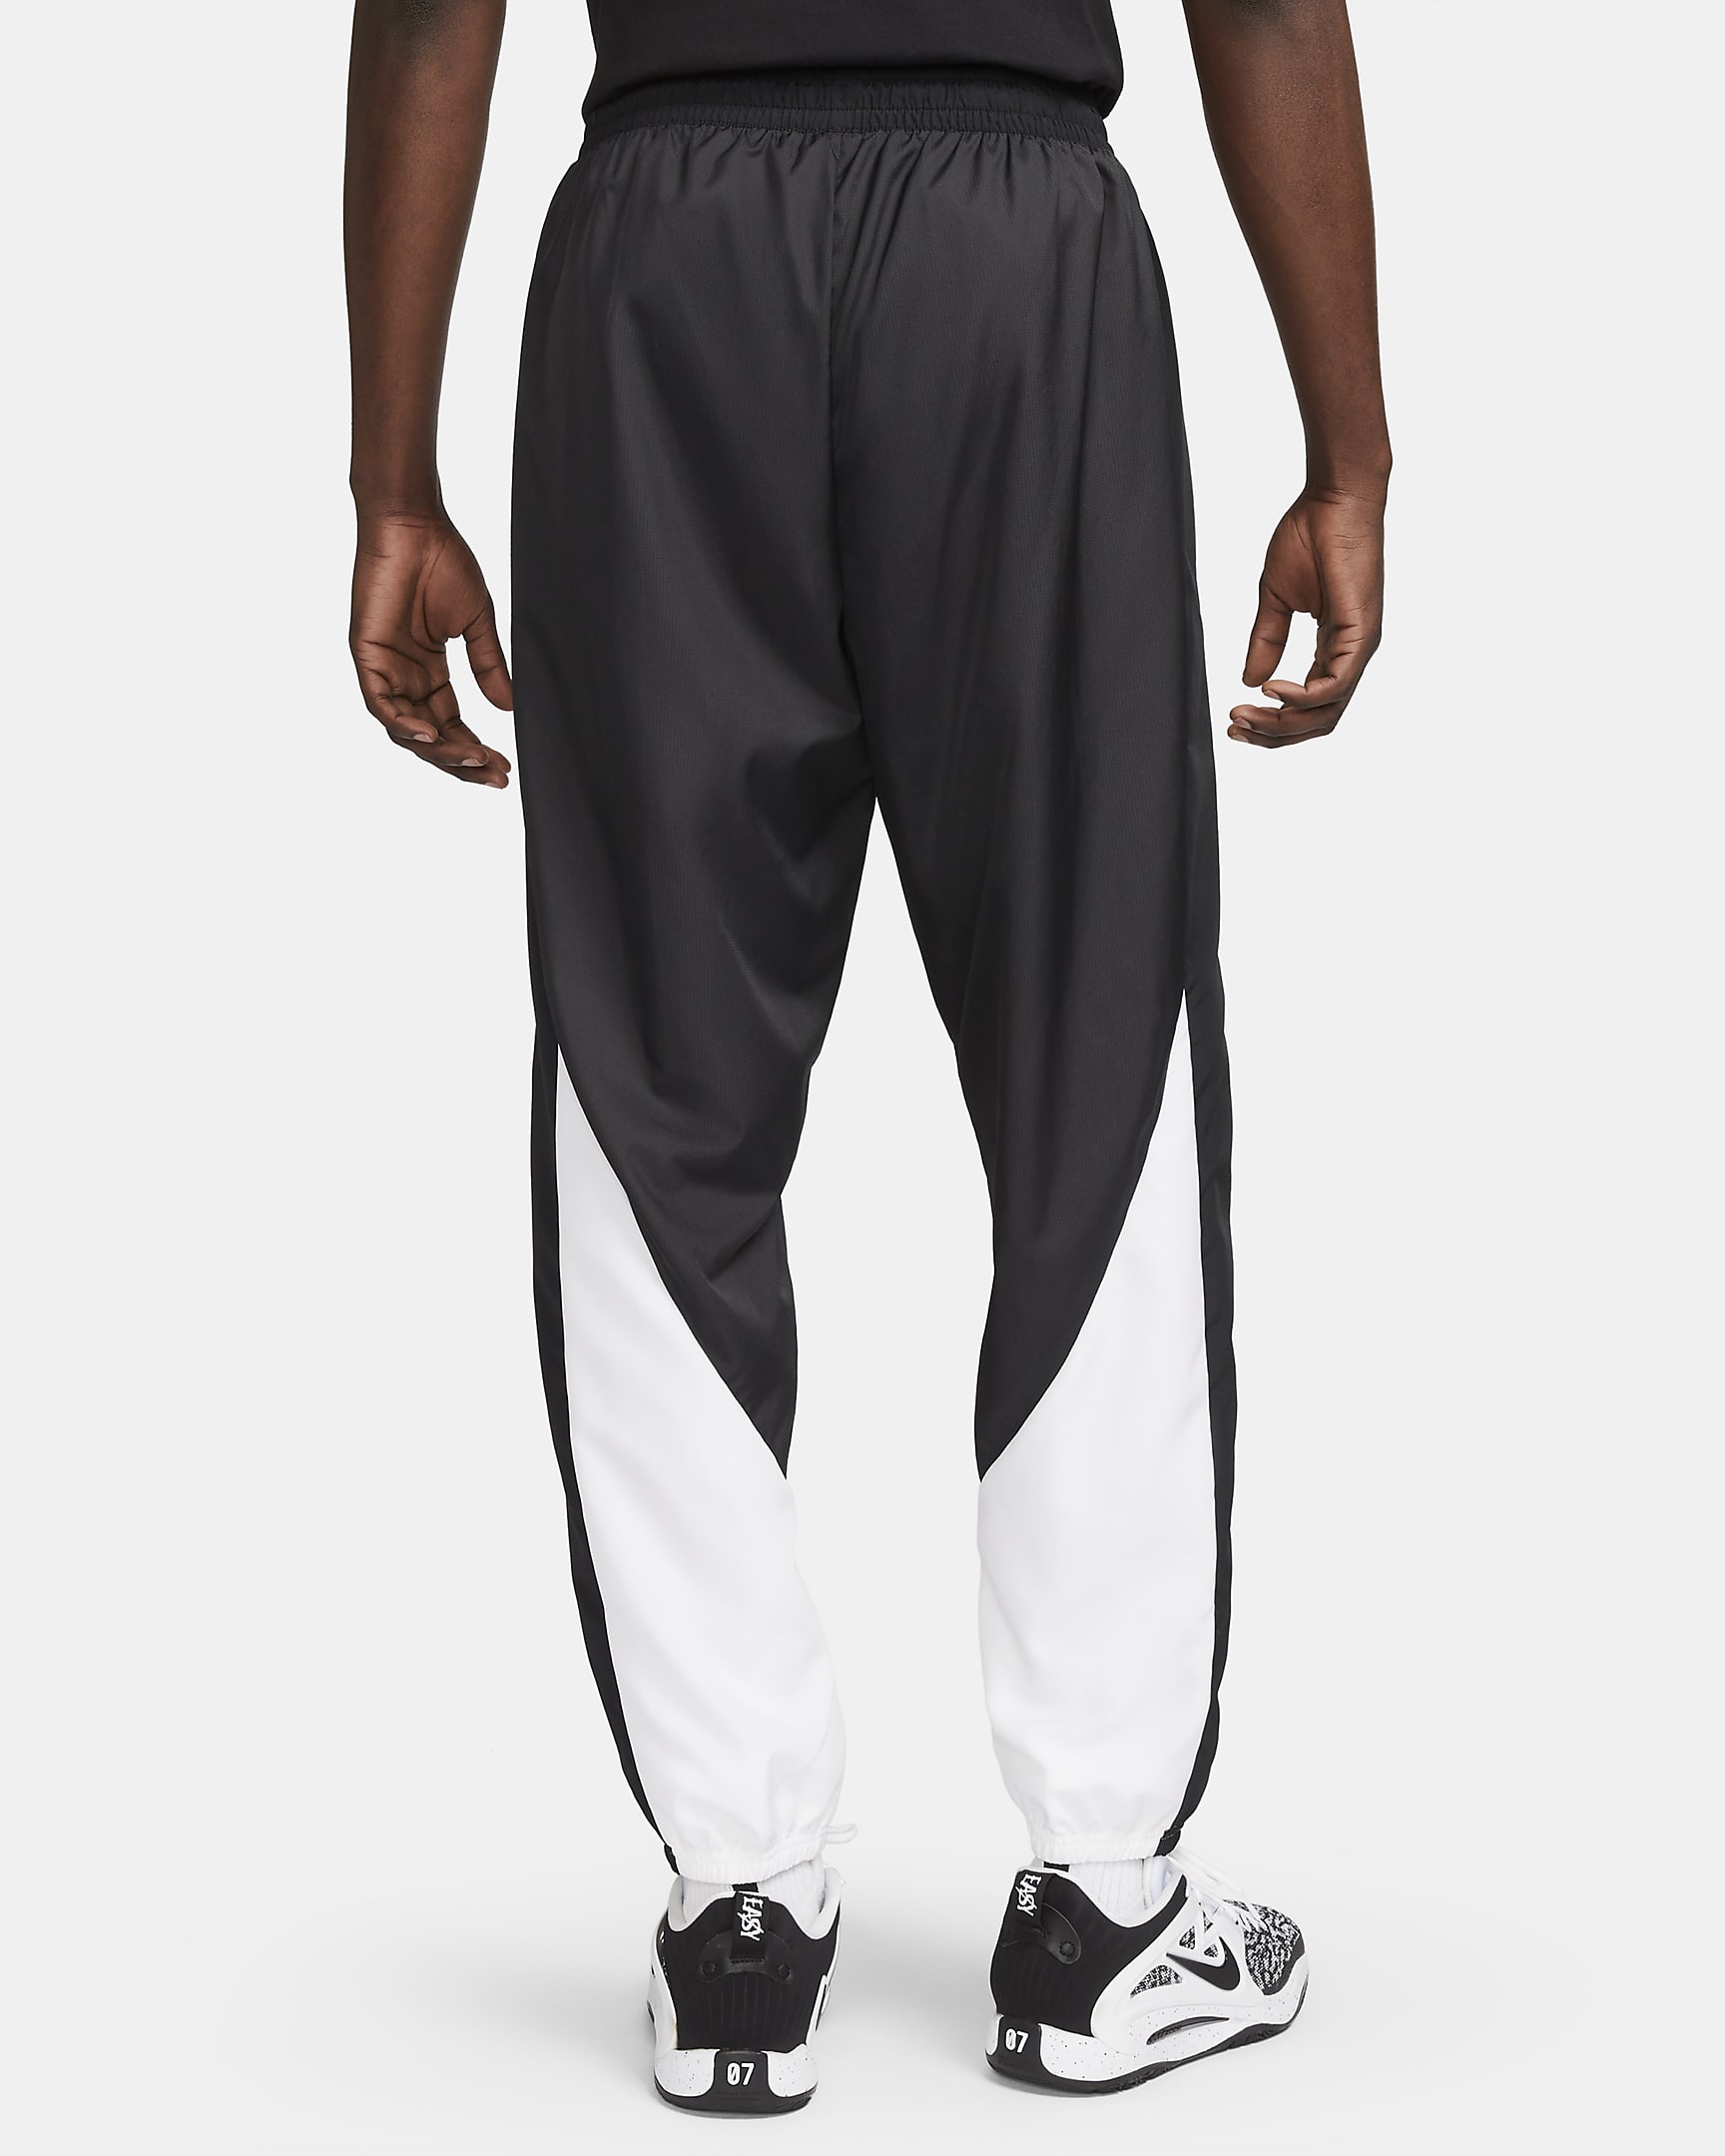 Nike Starting 5 Men's Basketball Trousers. Nike IL